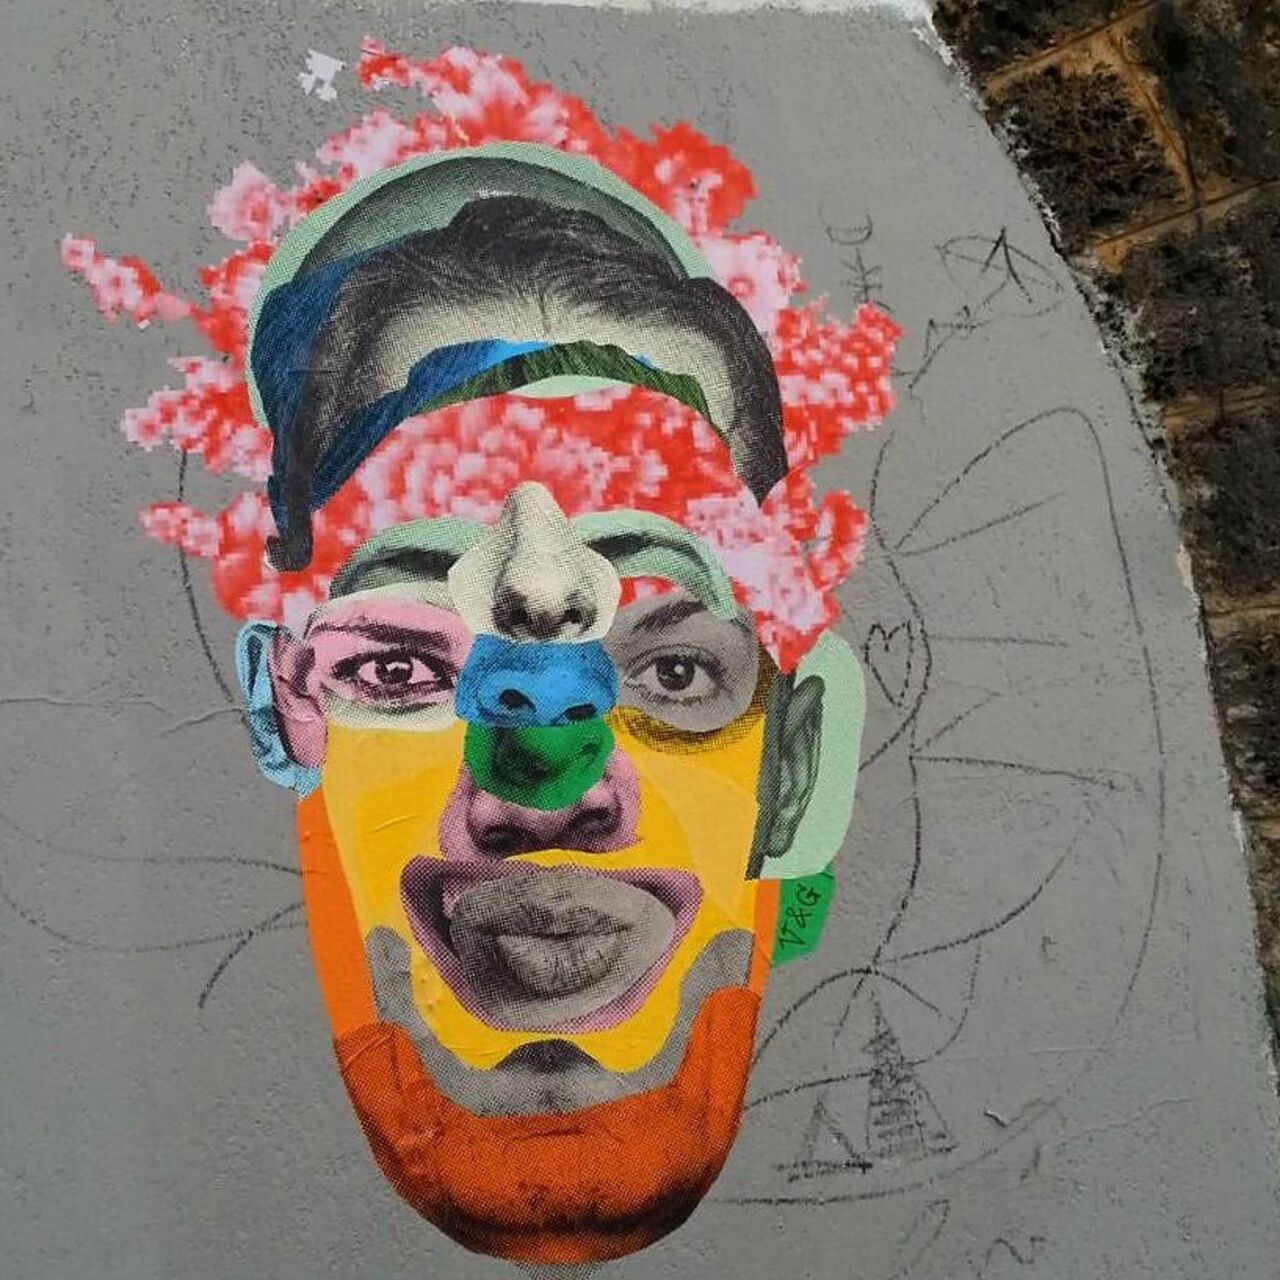 #Paris #graffiti photo by @fotoflaneuse http://ift.tt/1O0lUyl #StreetArt https://t.co/VNUFiKEluX